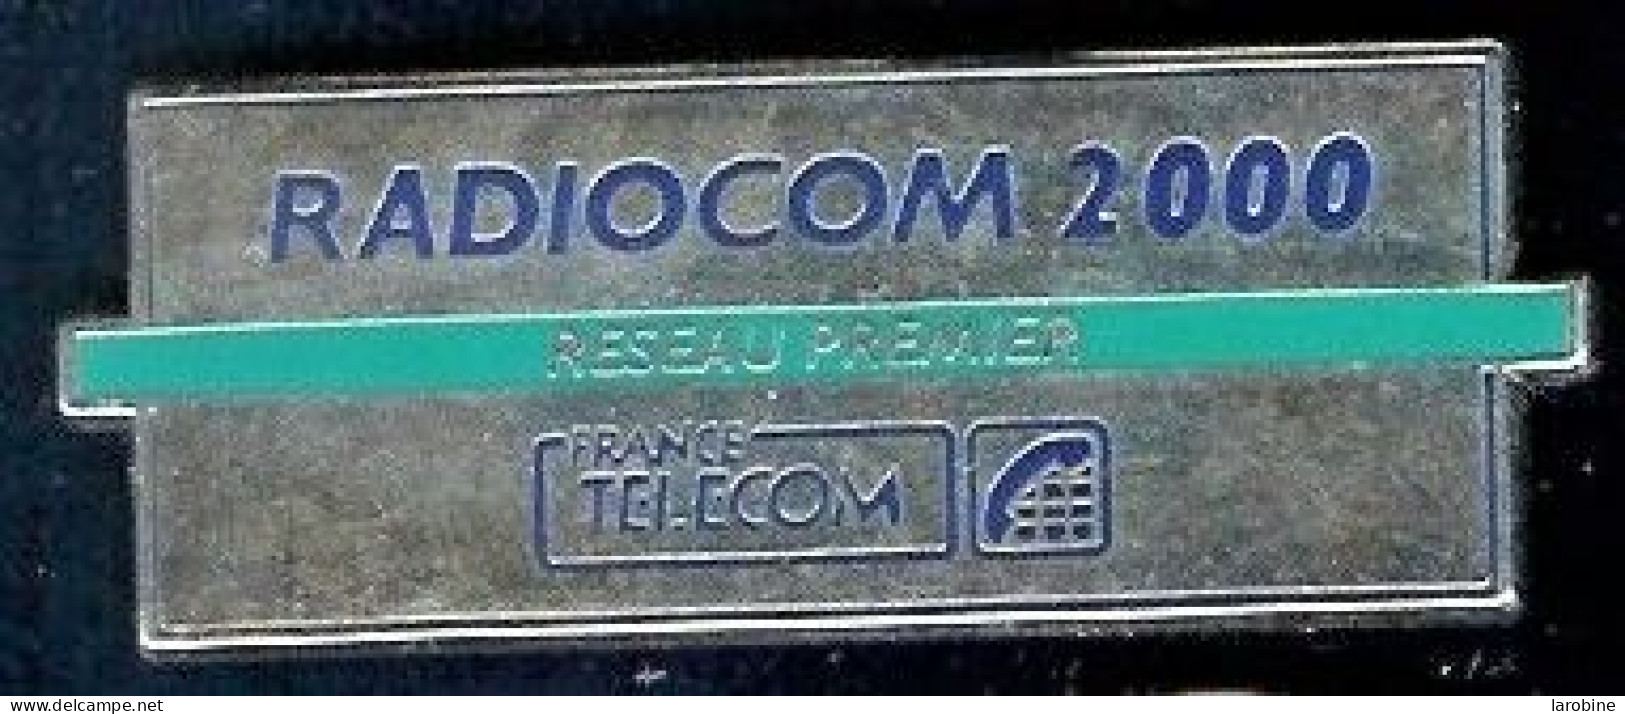 @@  France Telecom RADIOCOM 2000 Réseau Premier (4.5x1.7) @@poFT87 - France Télécom